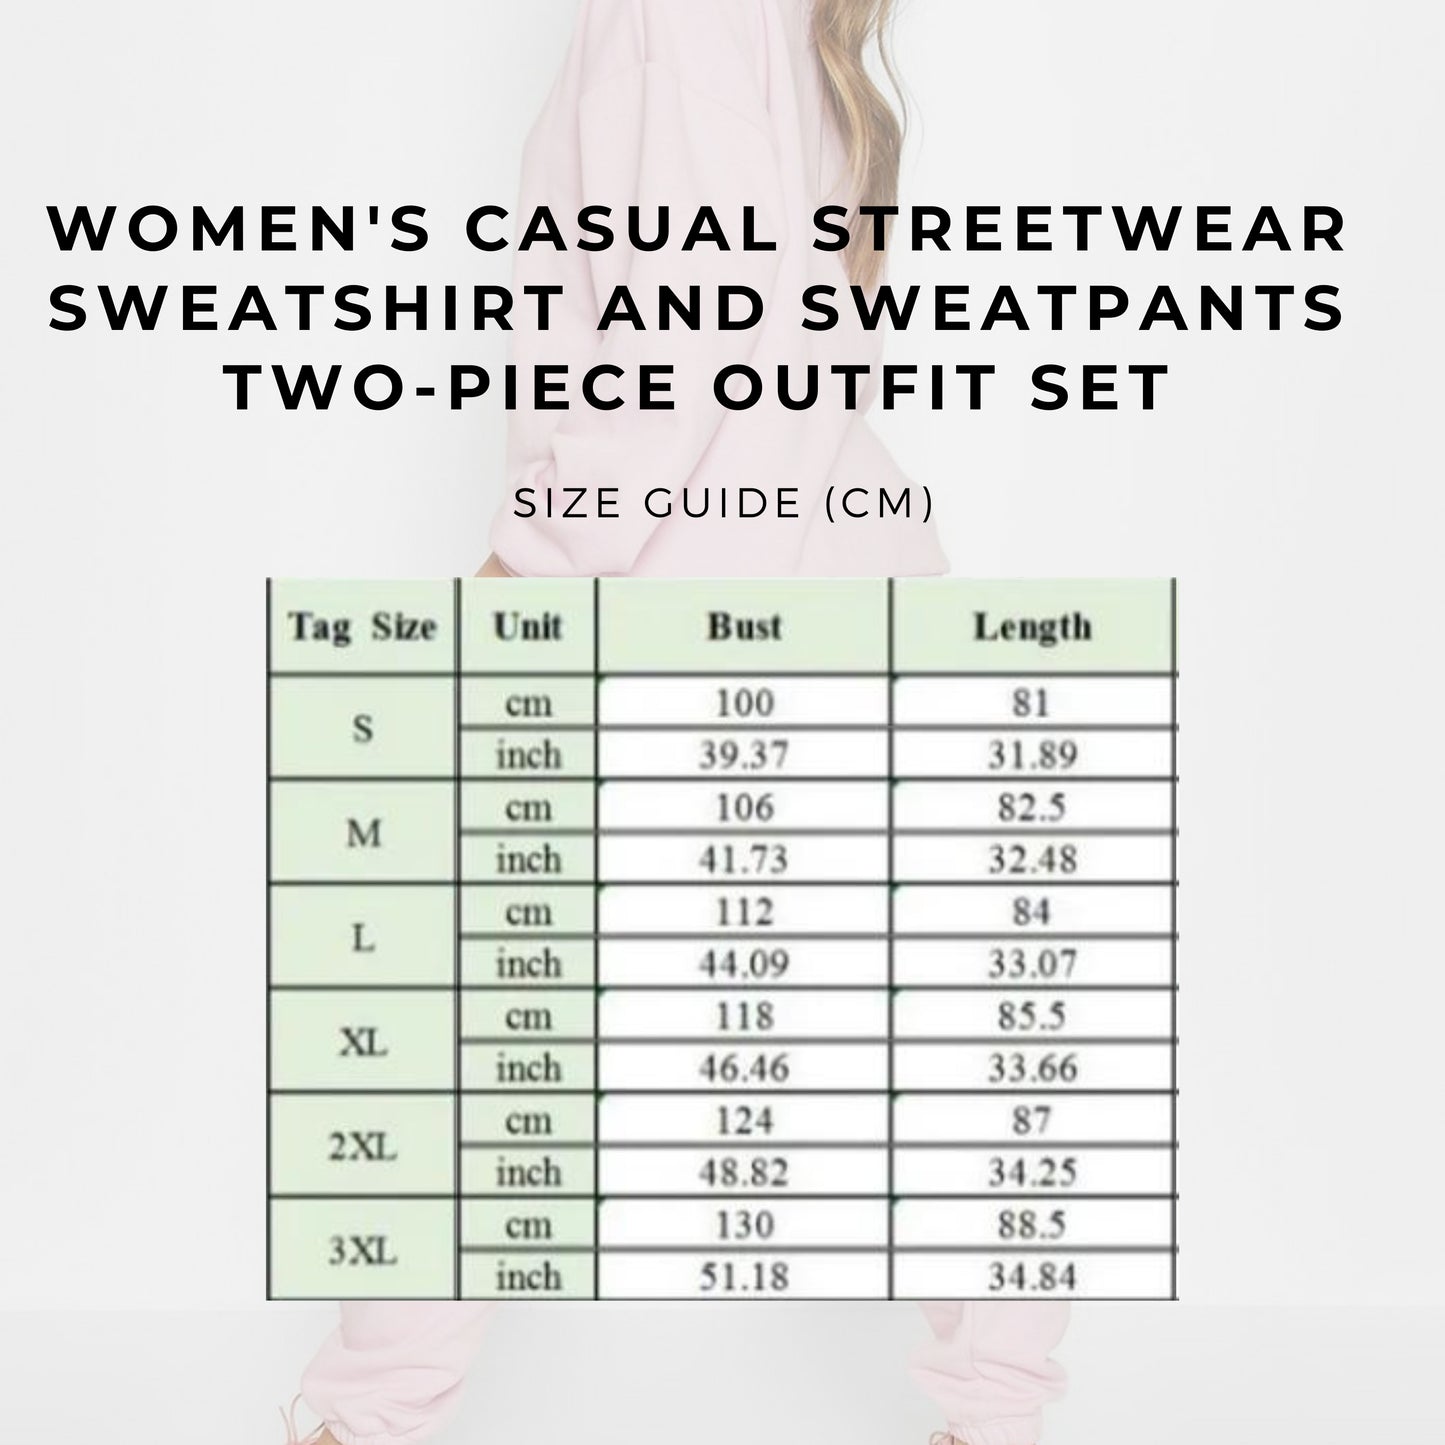 Women's Casual Streetwear Sweatshirt and Sweatpants Two-Piece Outfit Set